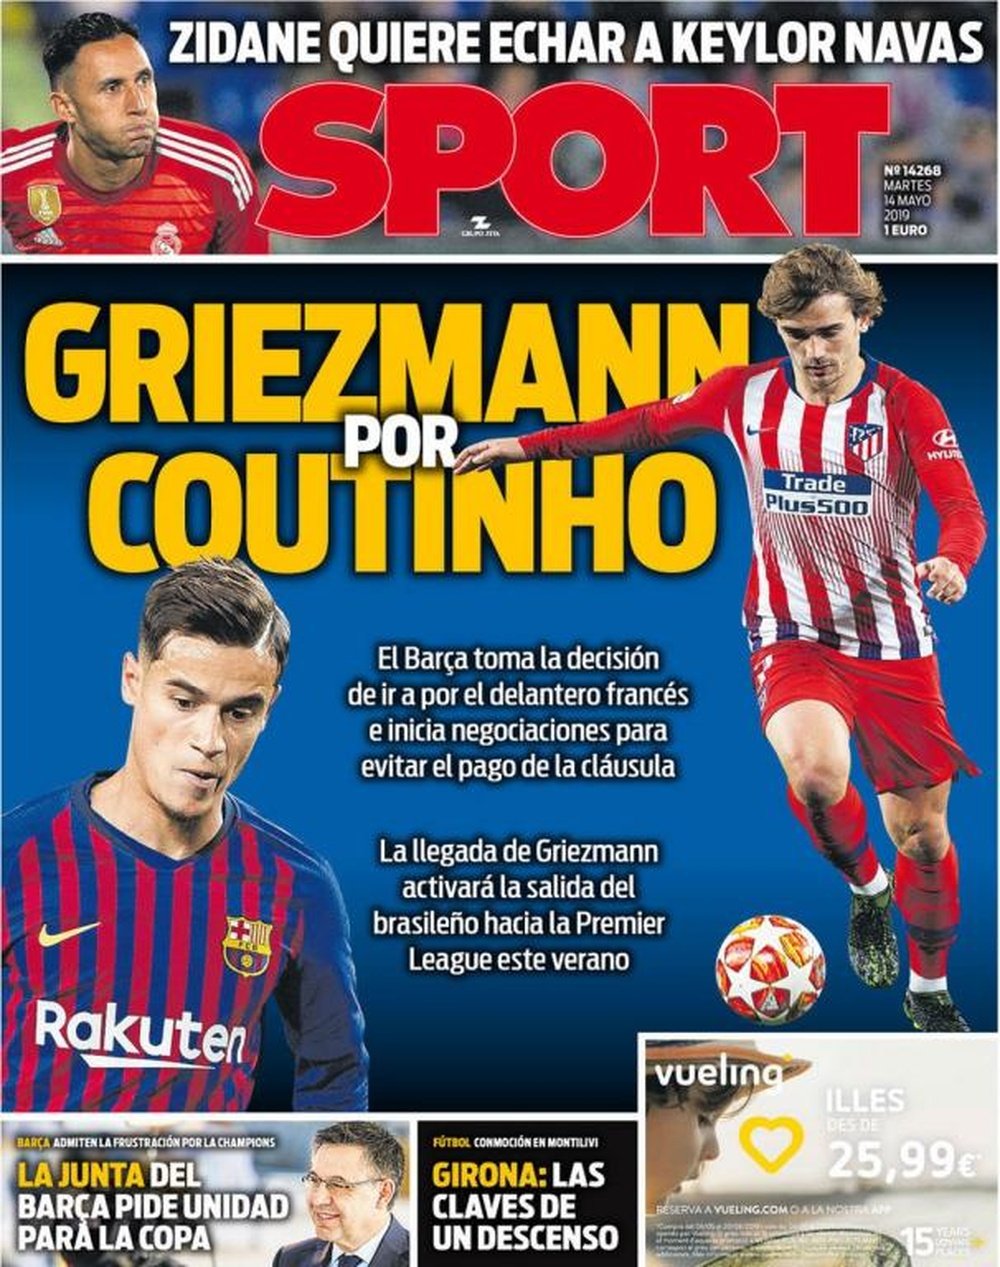 Capa do jornal 'Sport' de 14-05-19. Sport